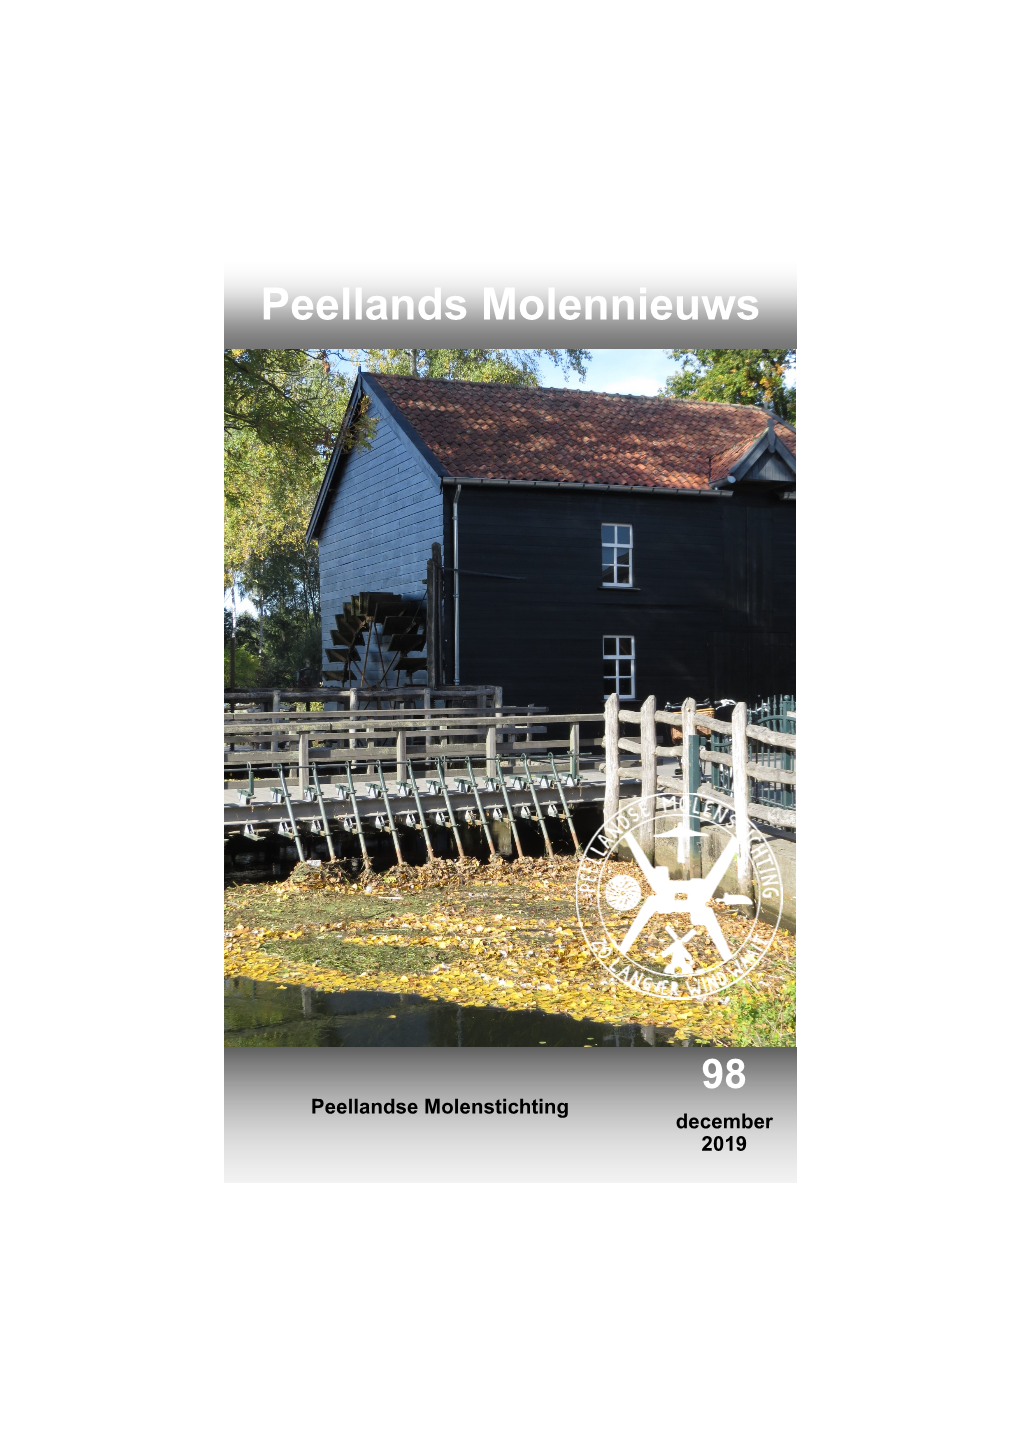 Peellands Molennieuws